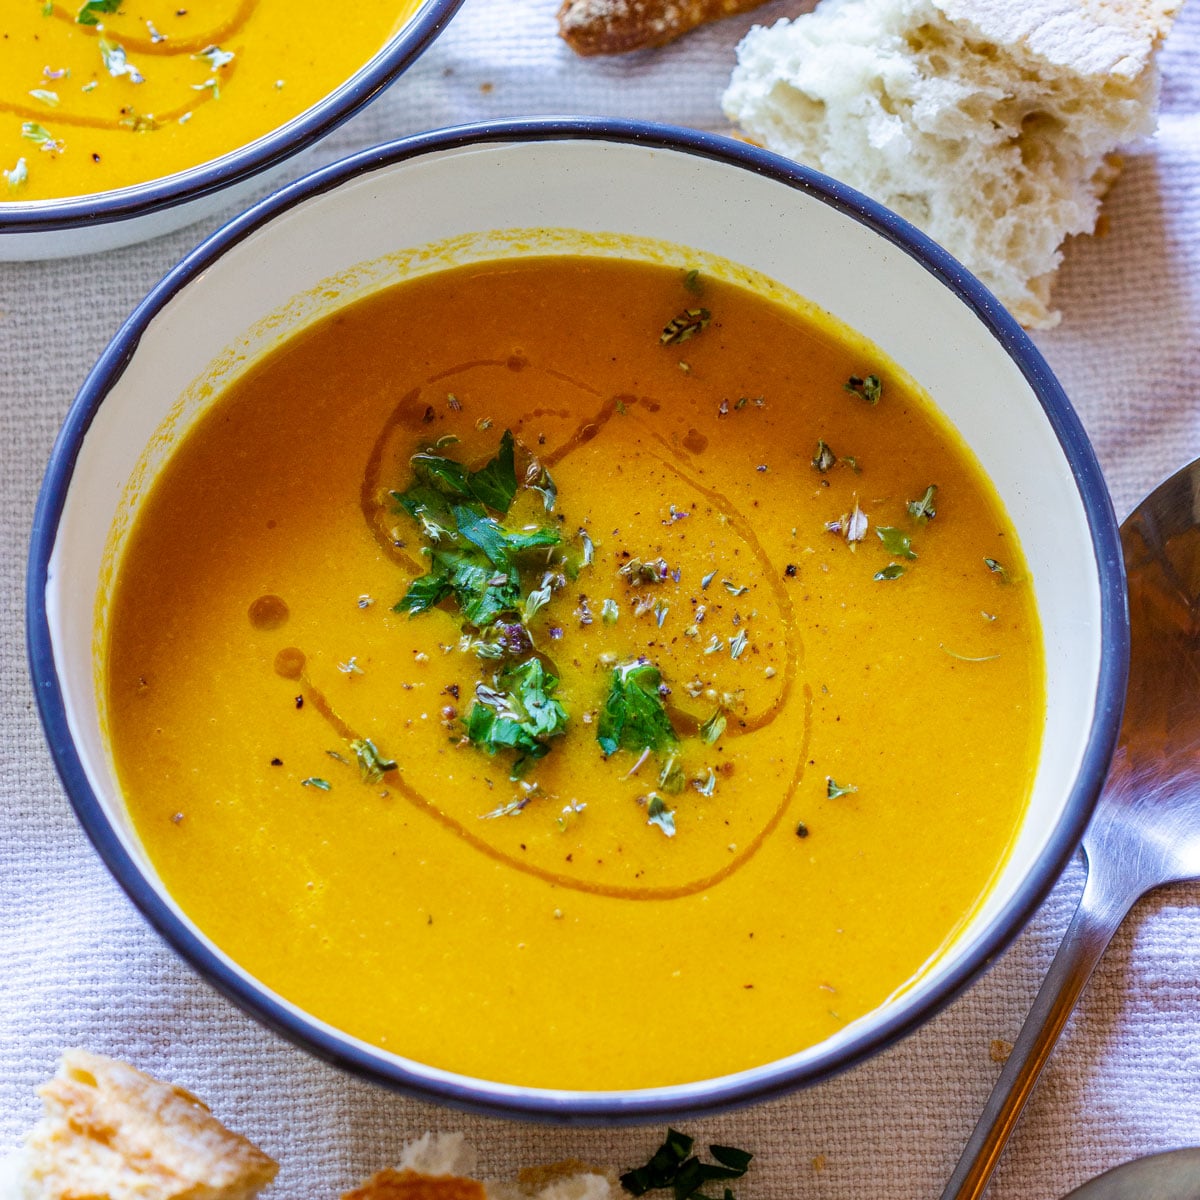 https://www.happyfoodstube.com/wp-content/uploads/2020/11/roasted-carrot-soup-recipe.jpg